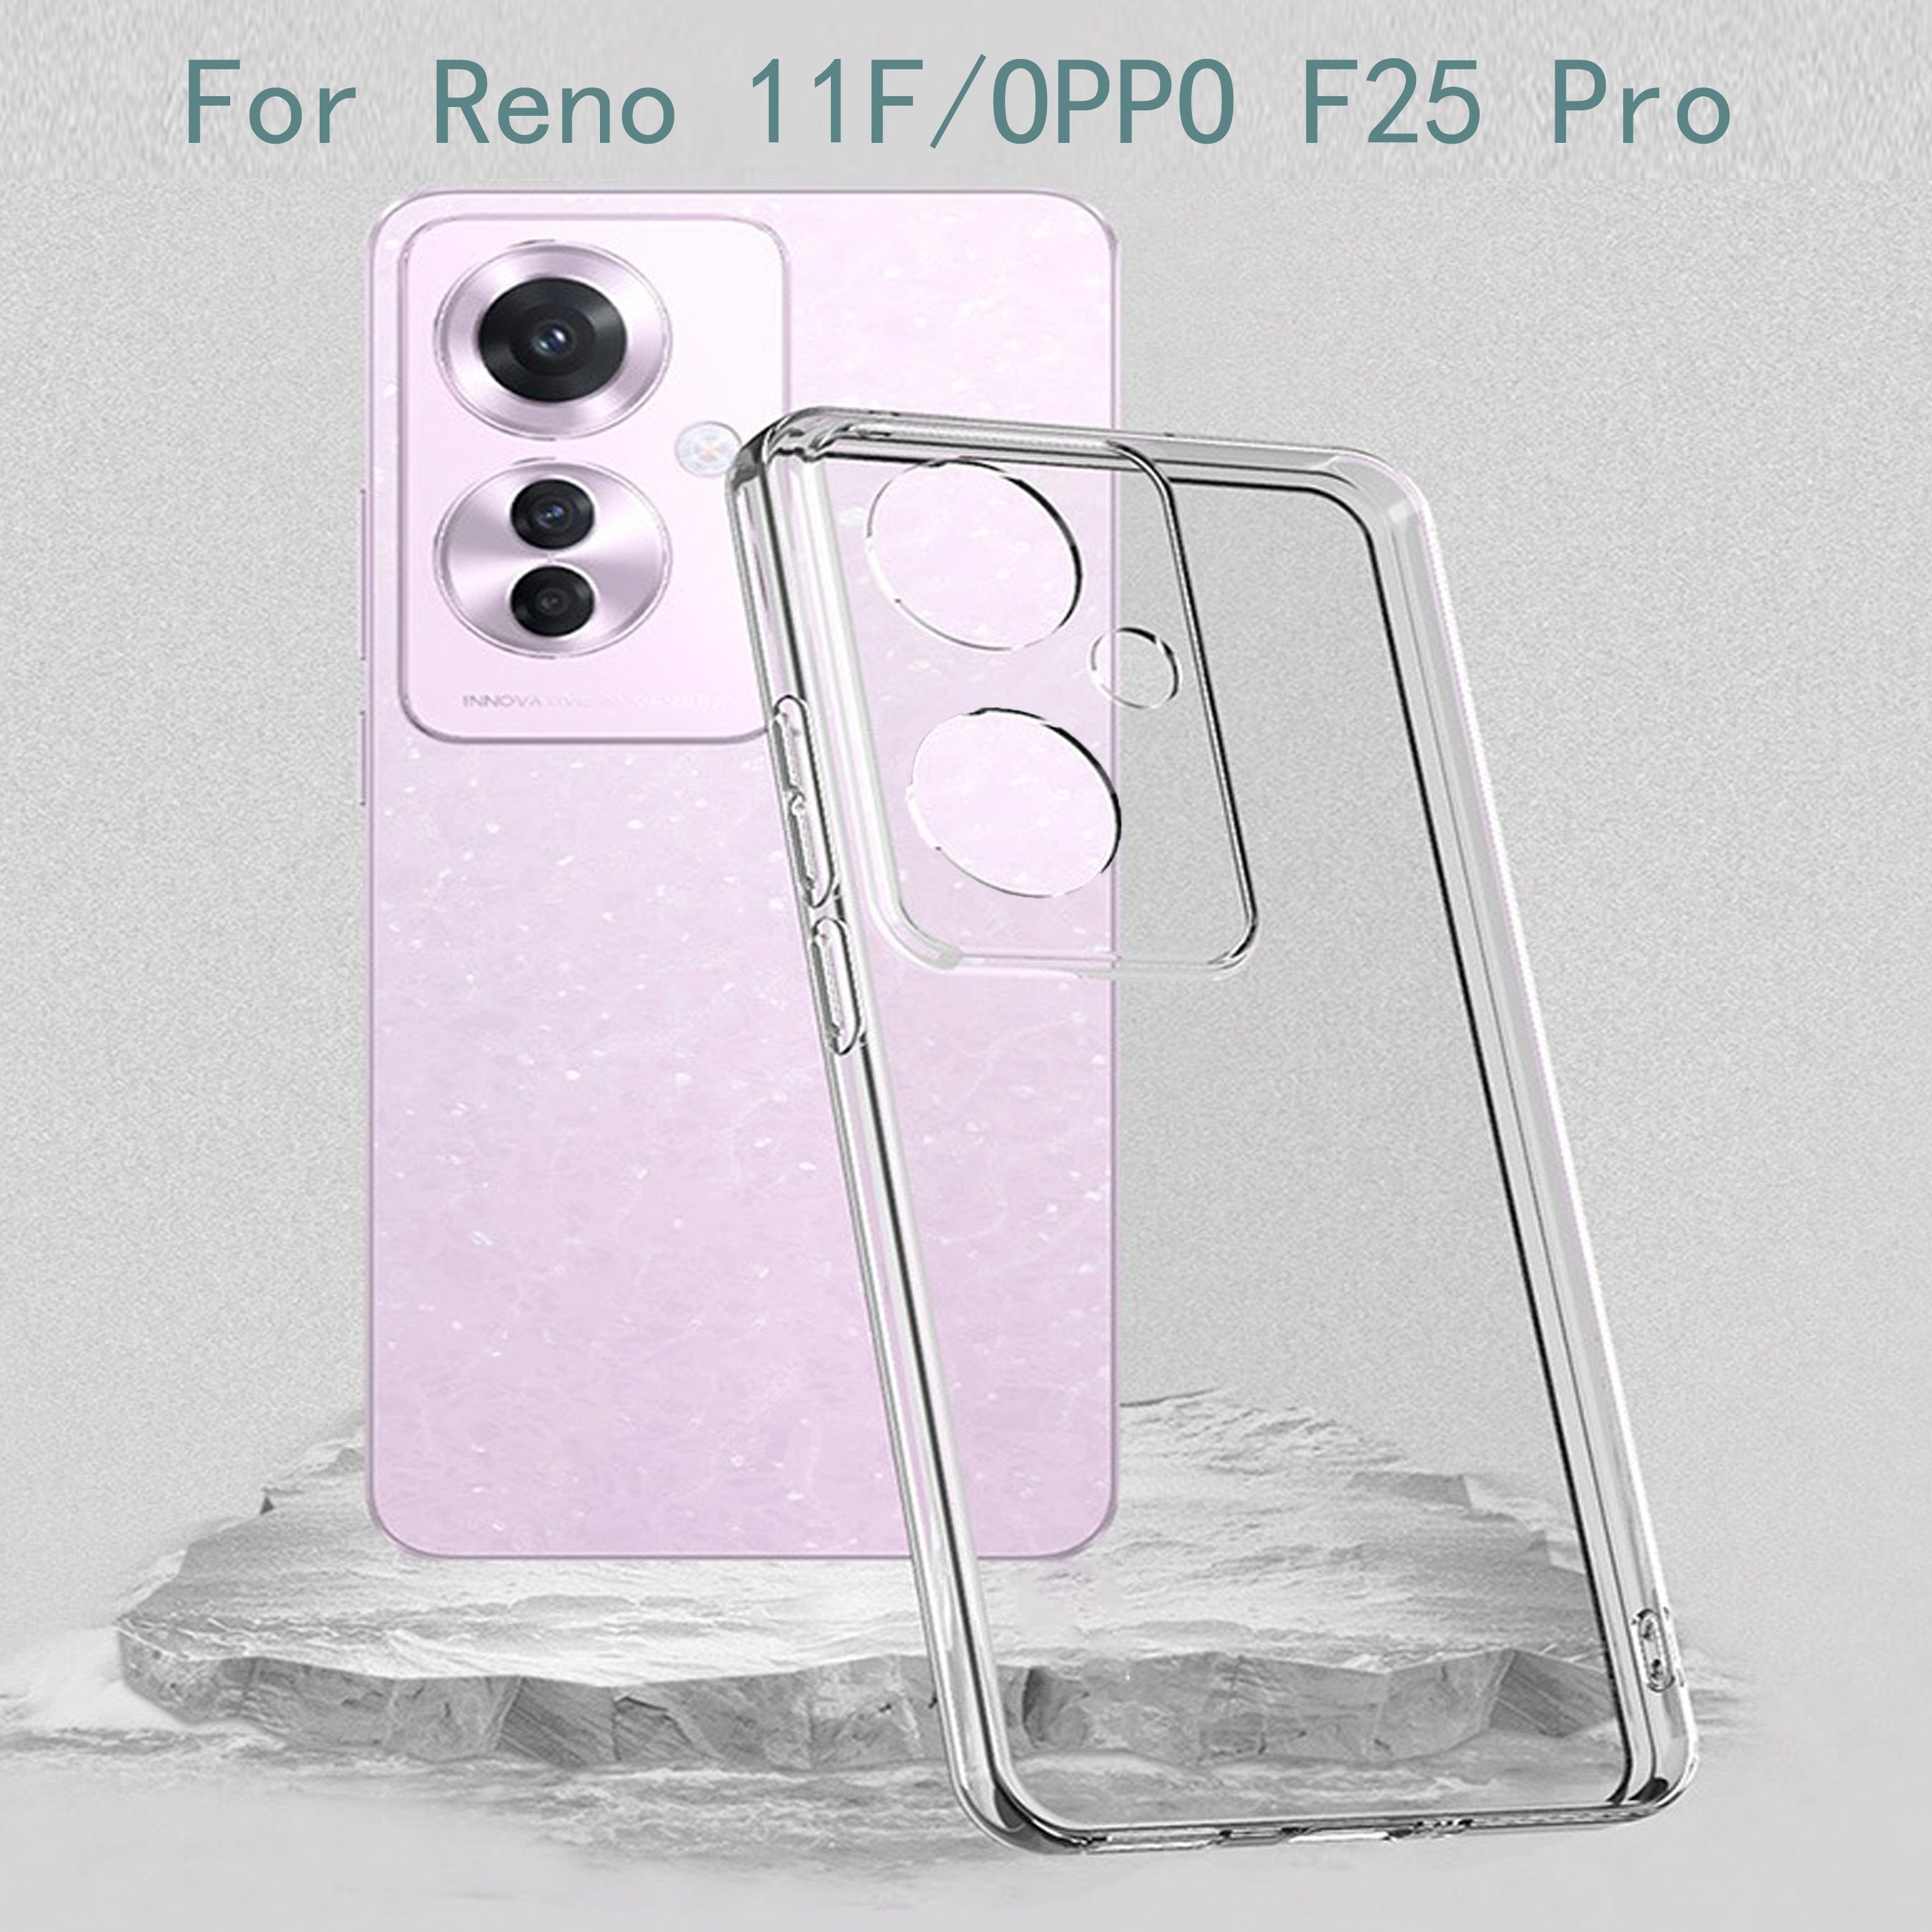 

Ultra-slim Transparent Tpu Case For Oppo Reno 11f & F25 Pro - Durable, Soft Protective Cover